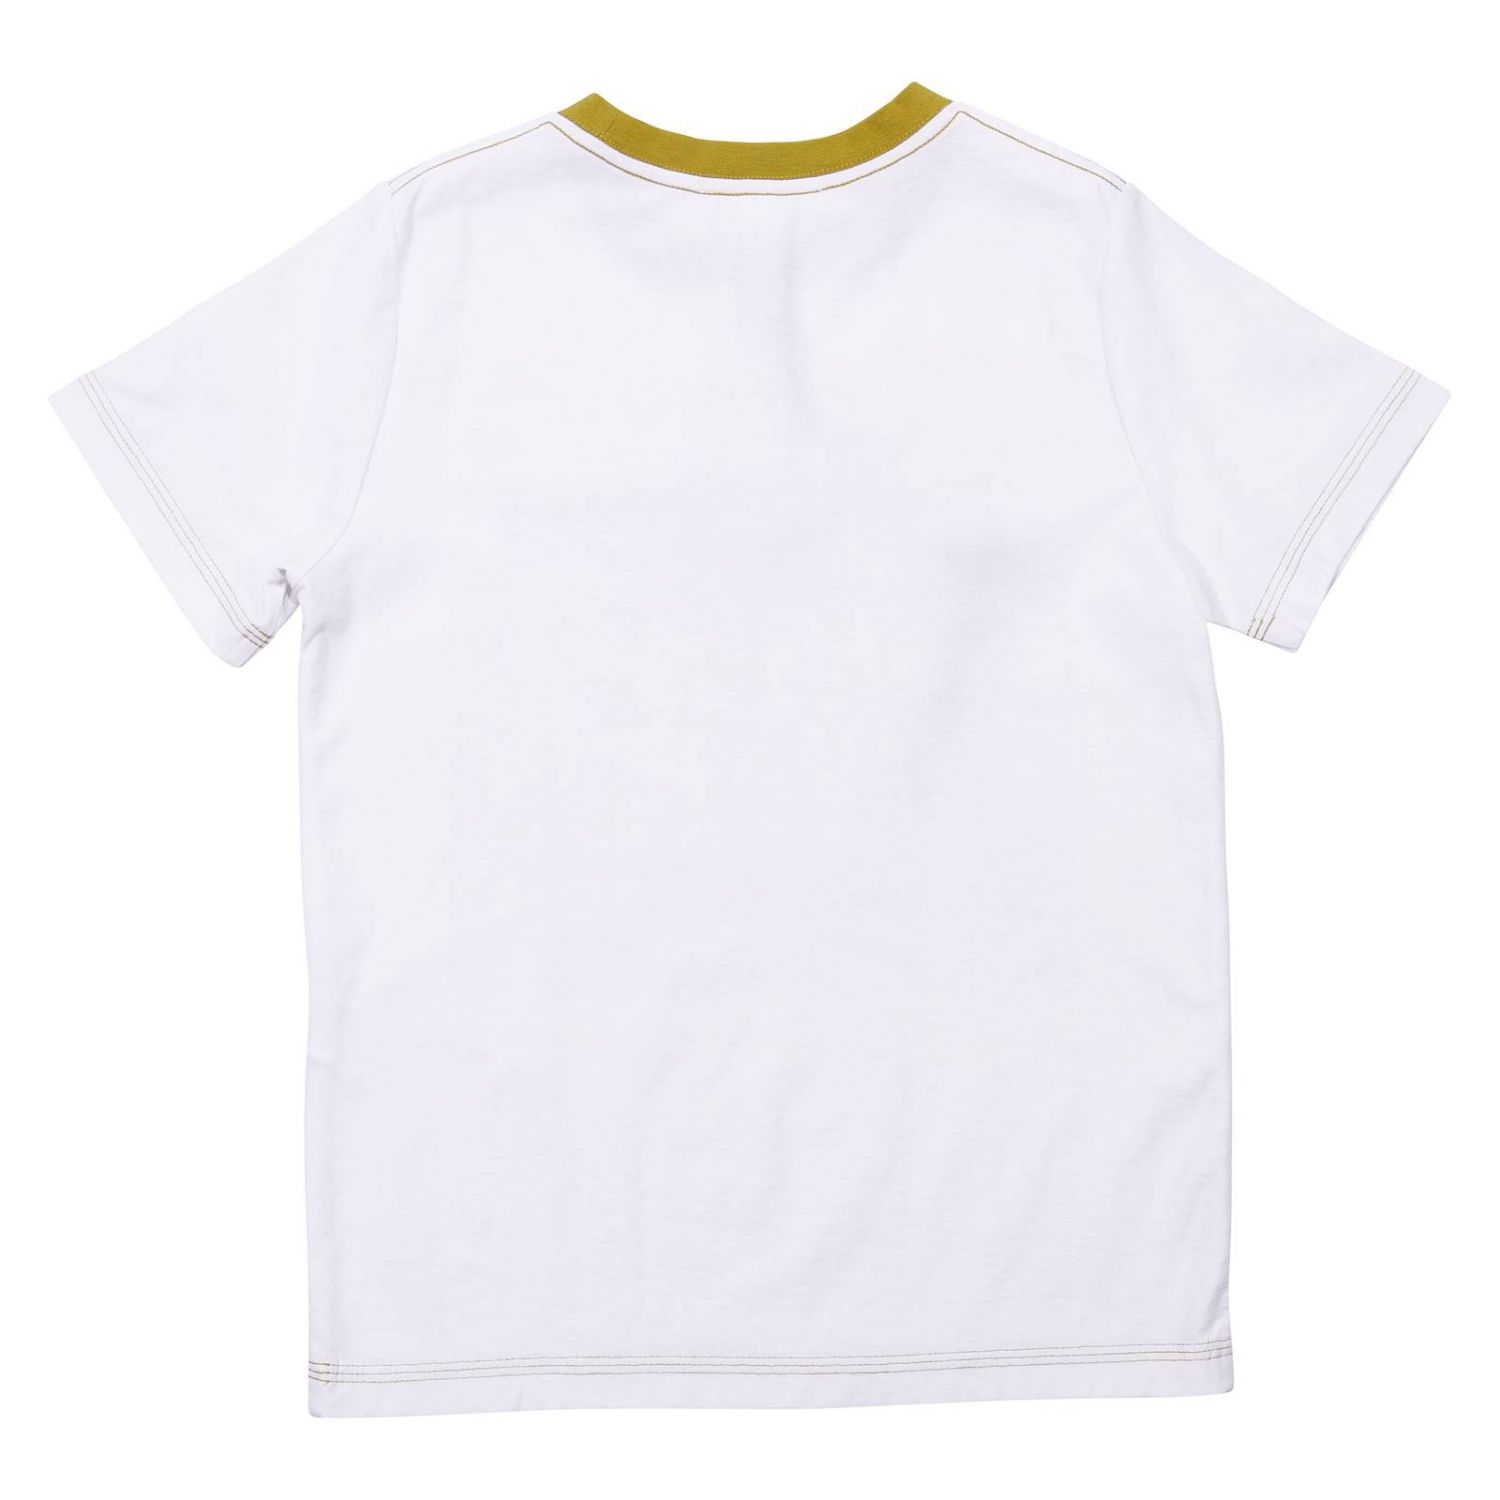 Burberry Outlet: T-shirt kids | T-Shirt Burberry Kids White | T-Shirt ...